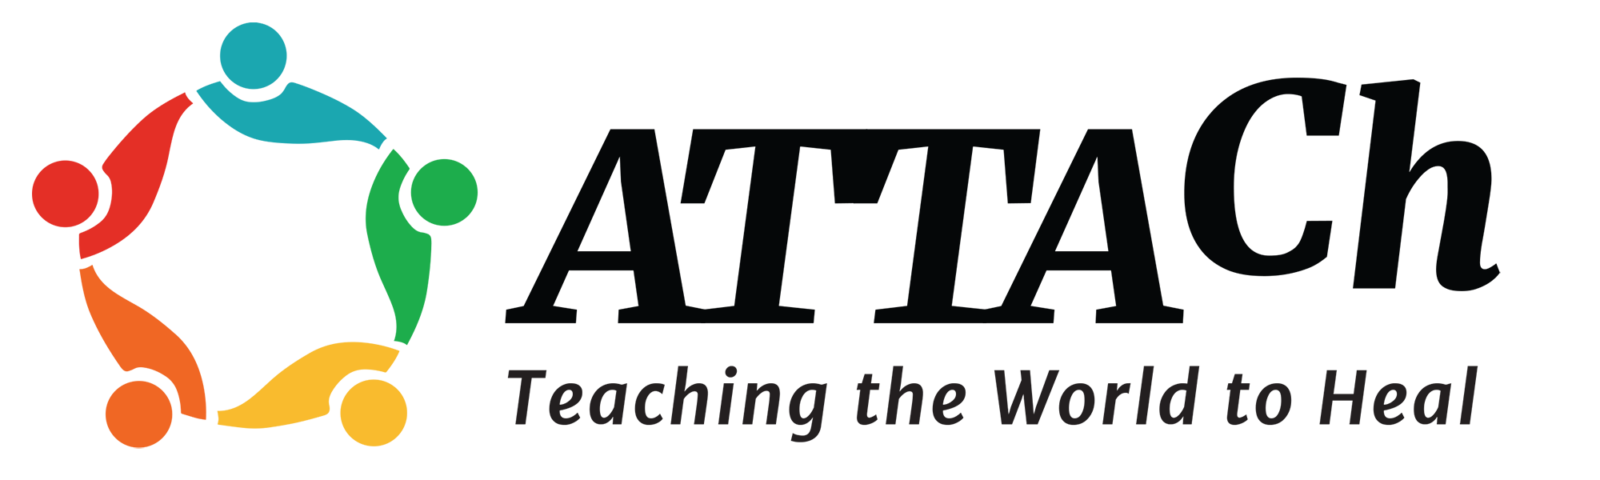 ATTACh logo 1